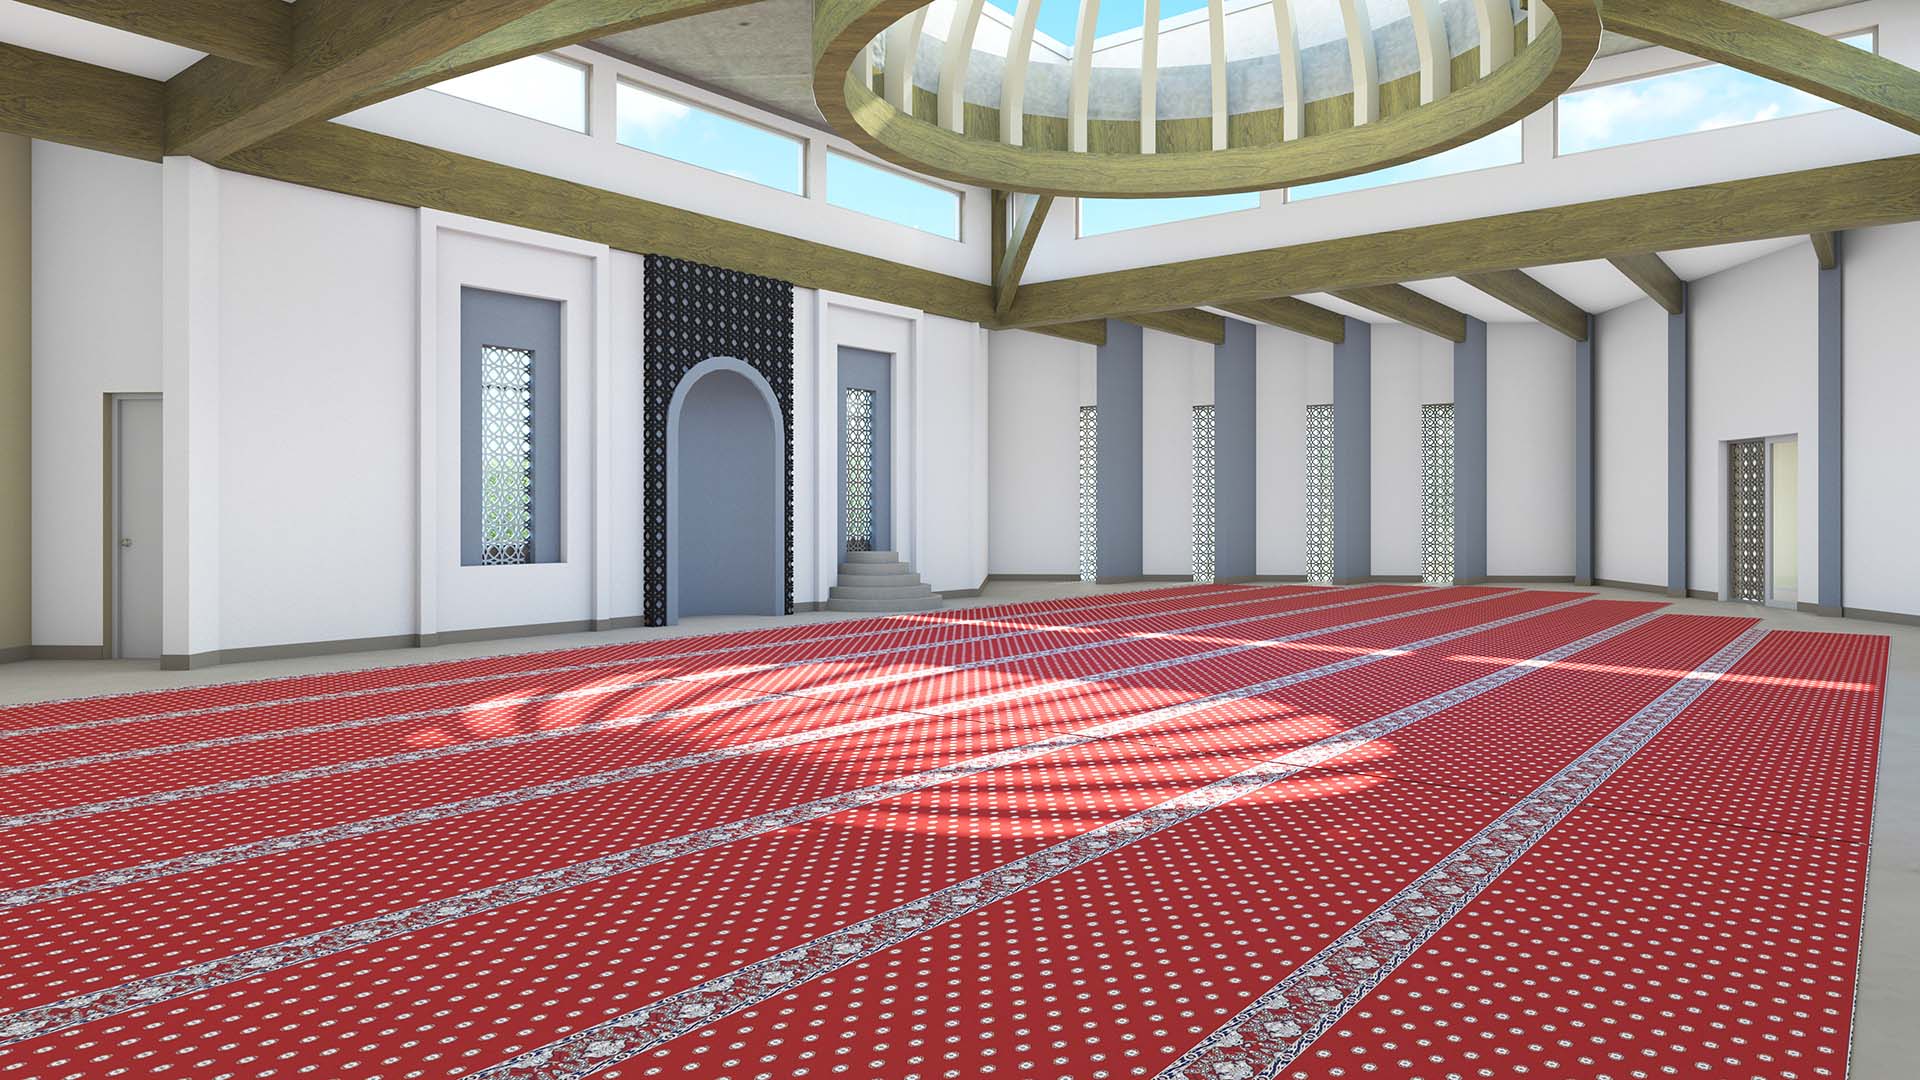 South Denver Islamic Center - Institutional - Institutional 4077-SouthDenver-IslamicCenter-dv4.jpg